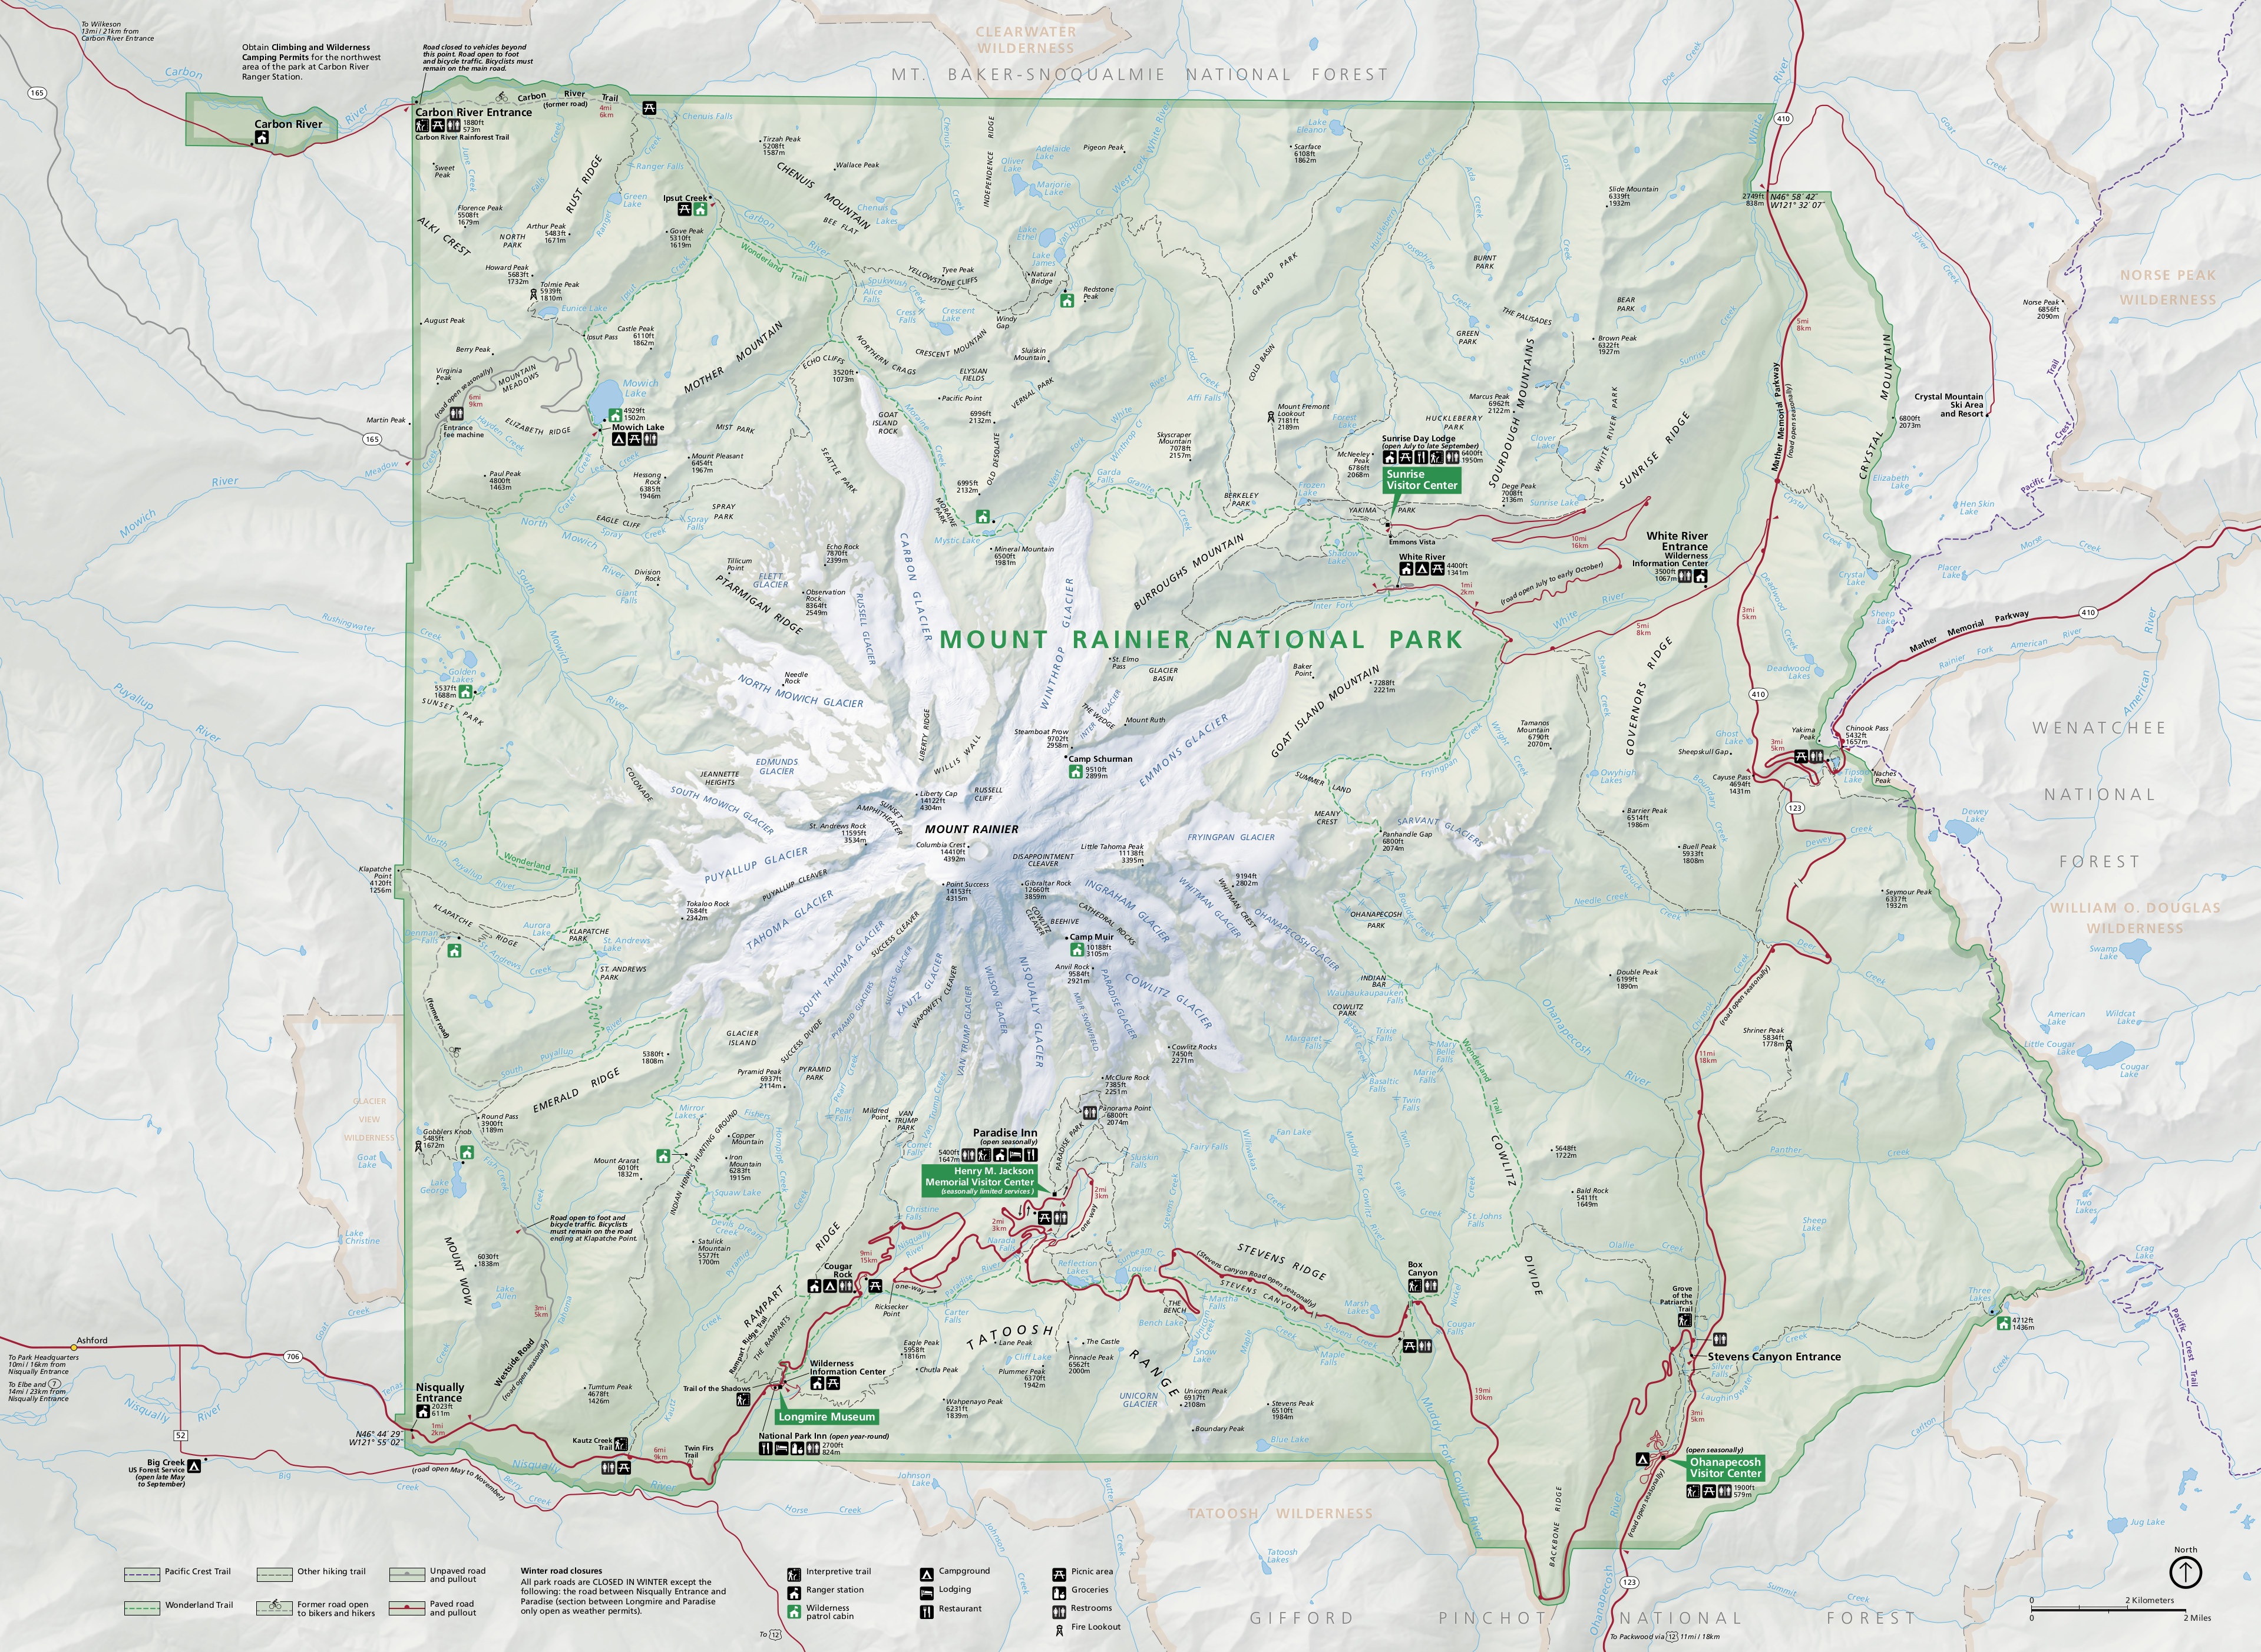 Mount Rainier Maps | NPMaps.com - just free maps, period.